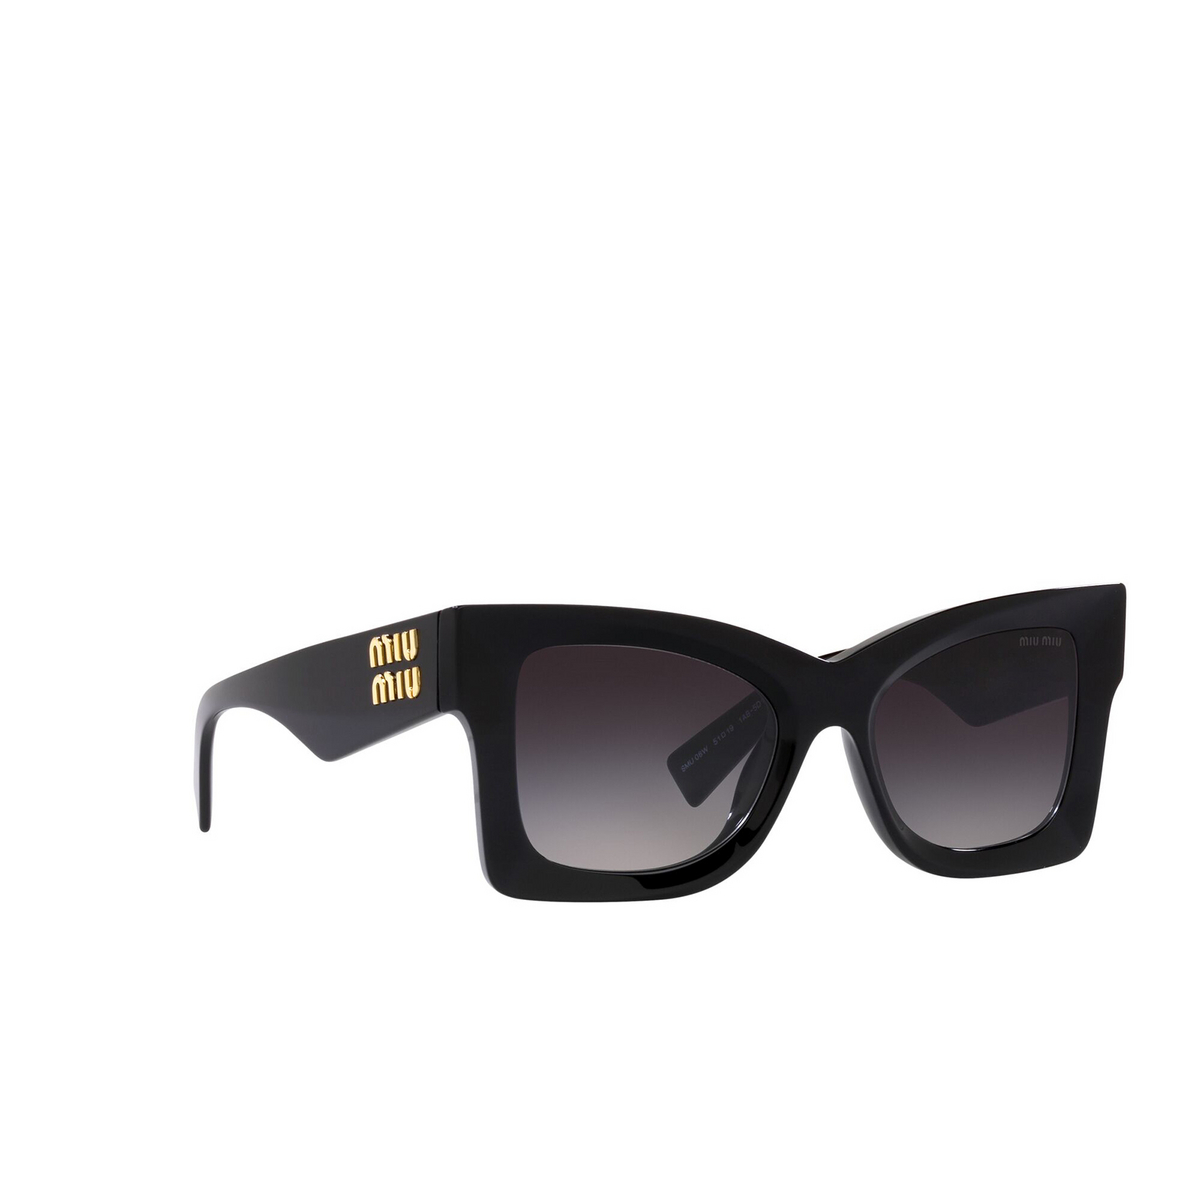 Miu Miu® Butterfly Sunglasses: MU 08WS color Black 1AB5D1 - three-quarters view.